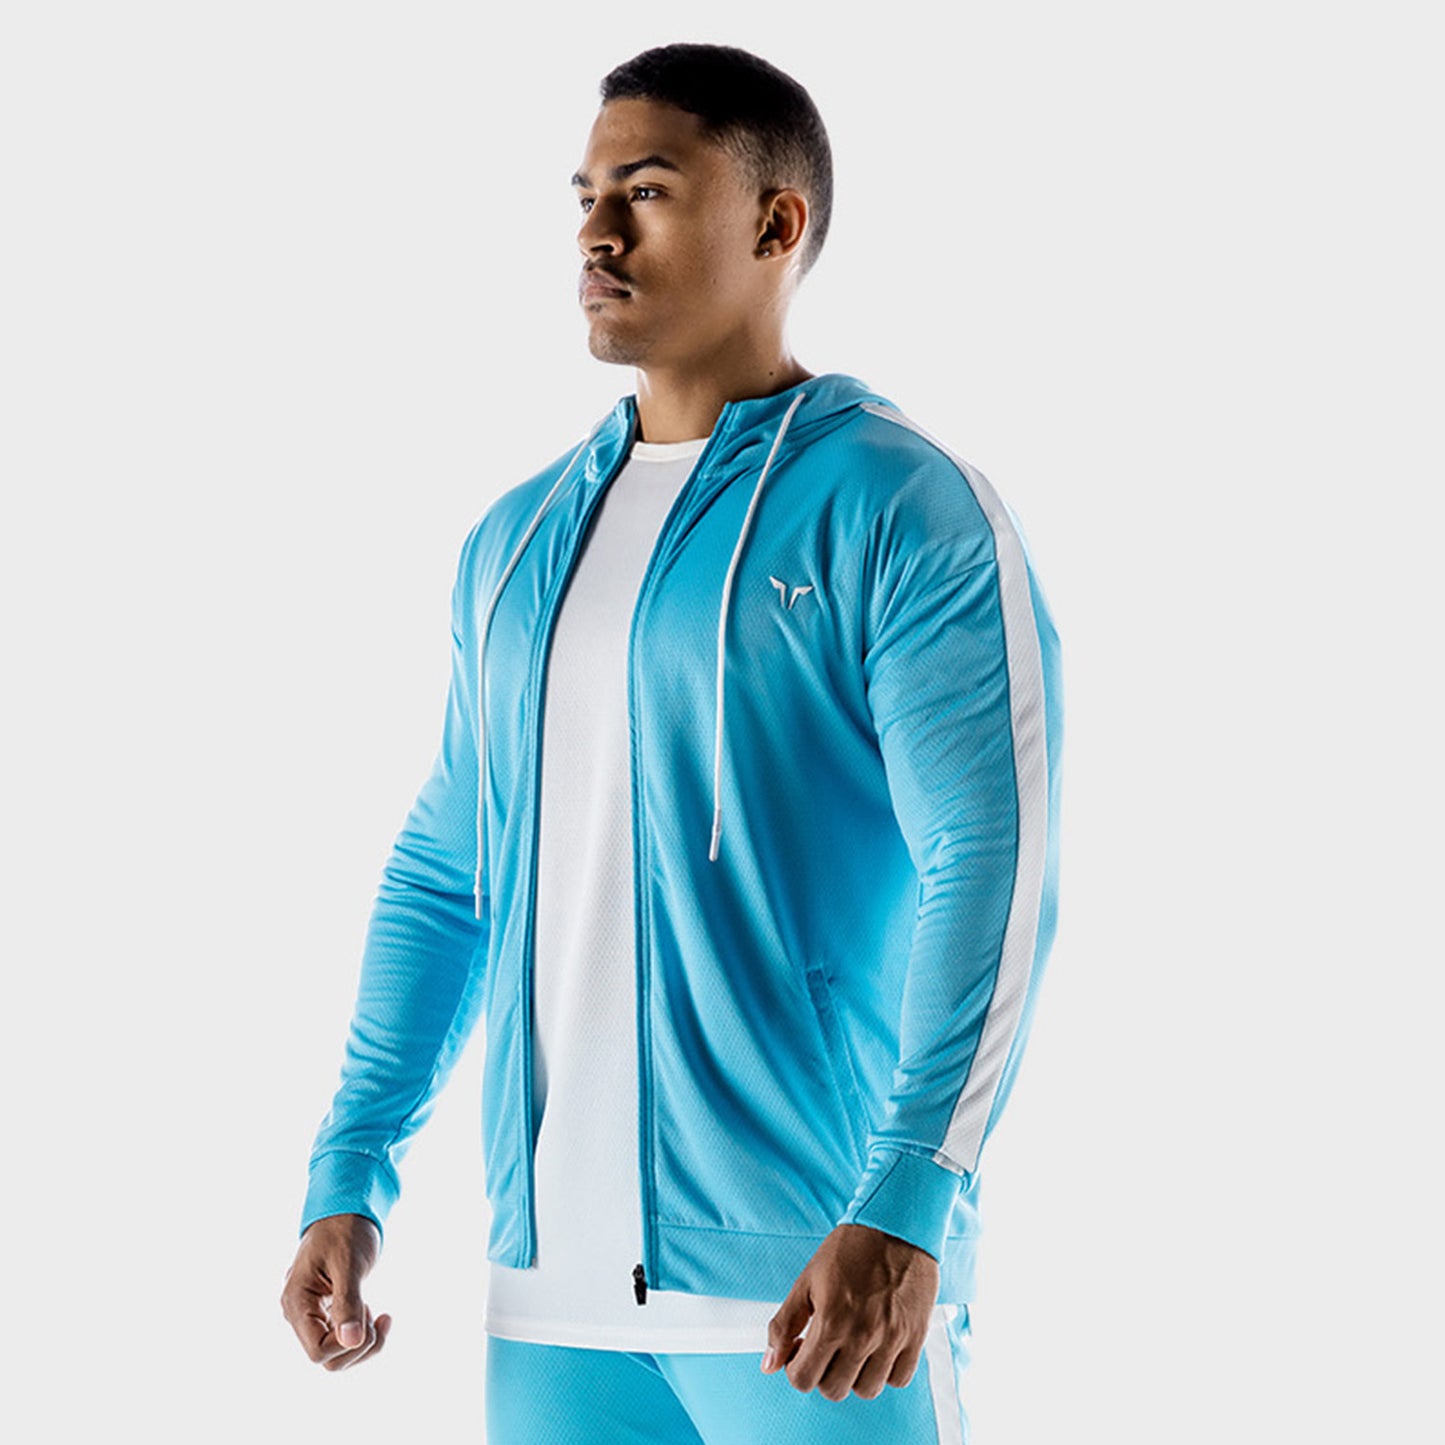 squatwolf-gym-wear-hybrid-zip-up-blue-workout-hoodies-for-men